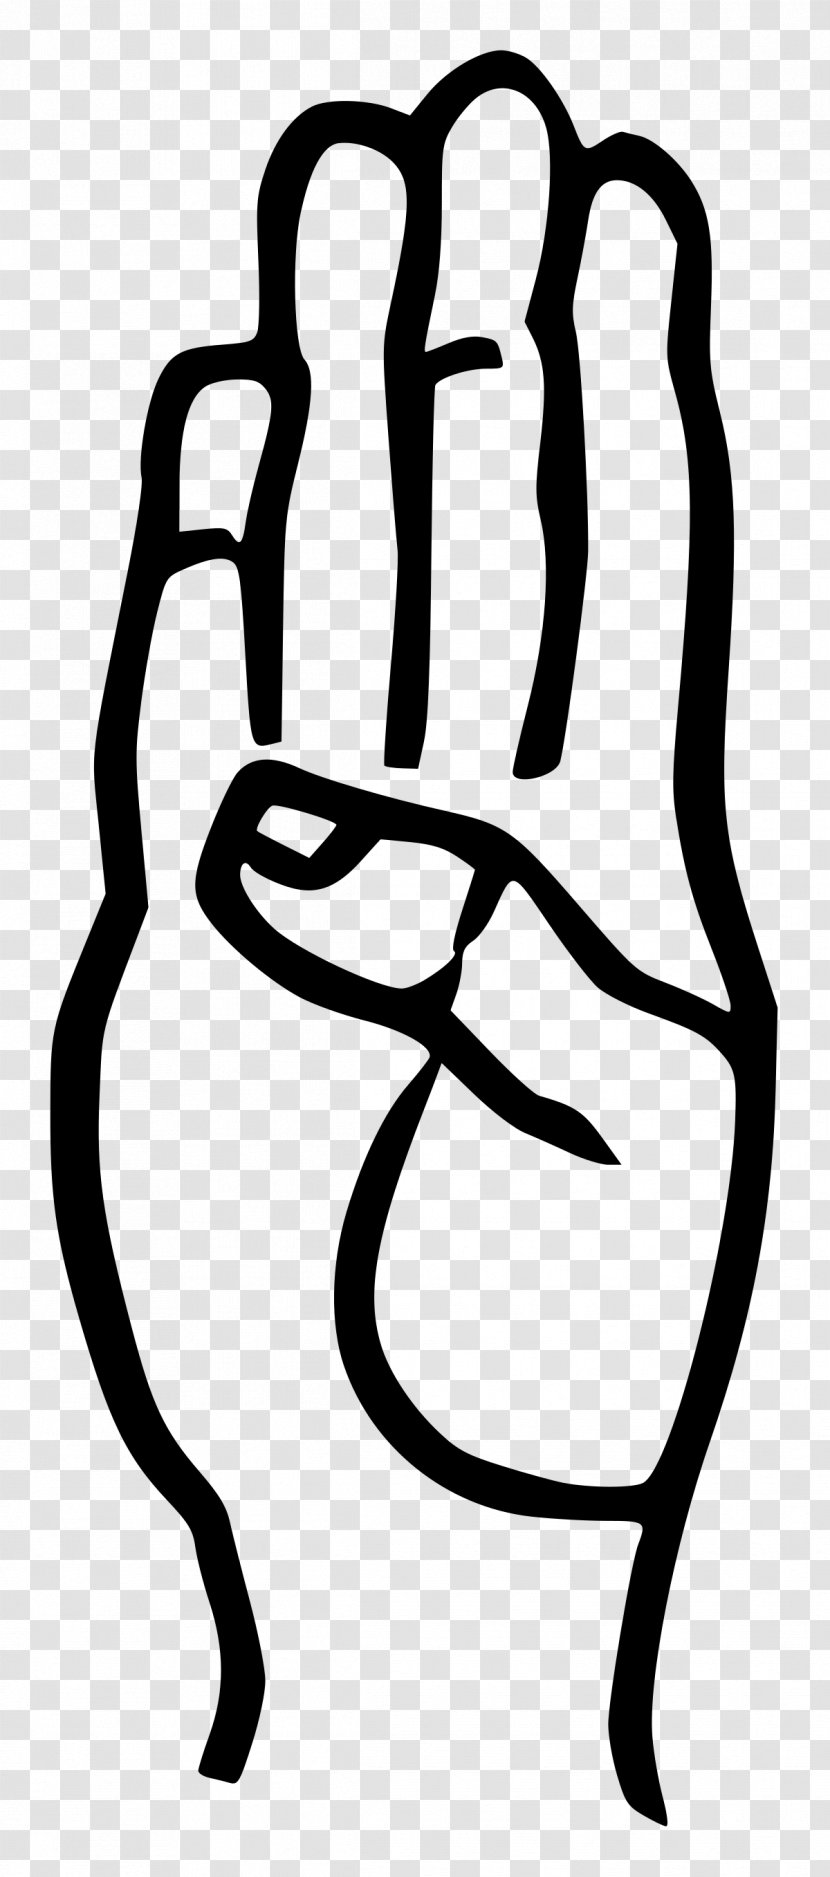 American Sign Language Voiced Bilabial Stop - Fingerspelling - Labeling Transparent PNG